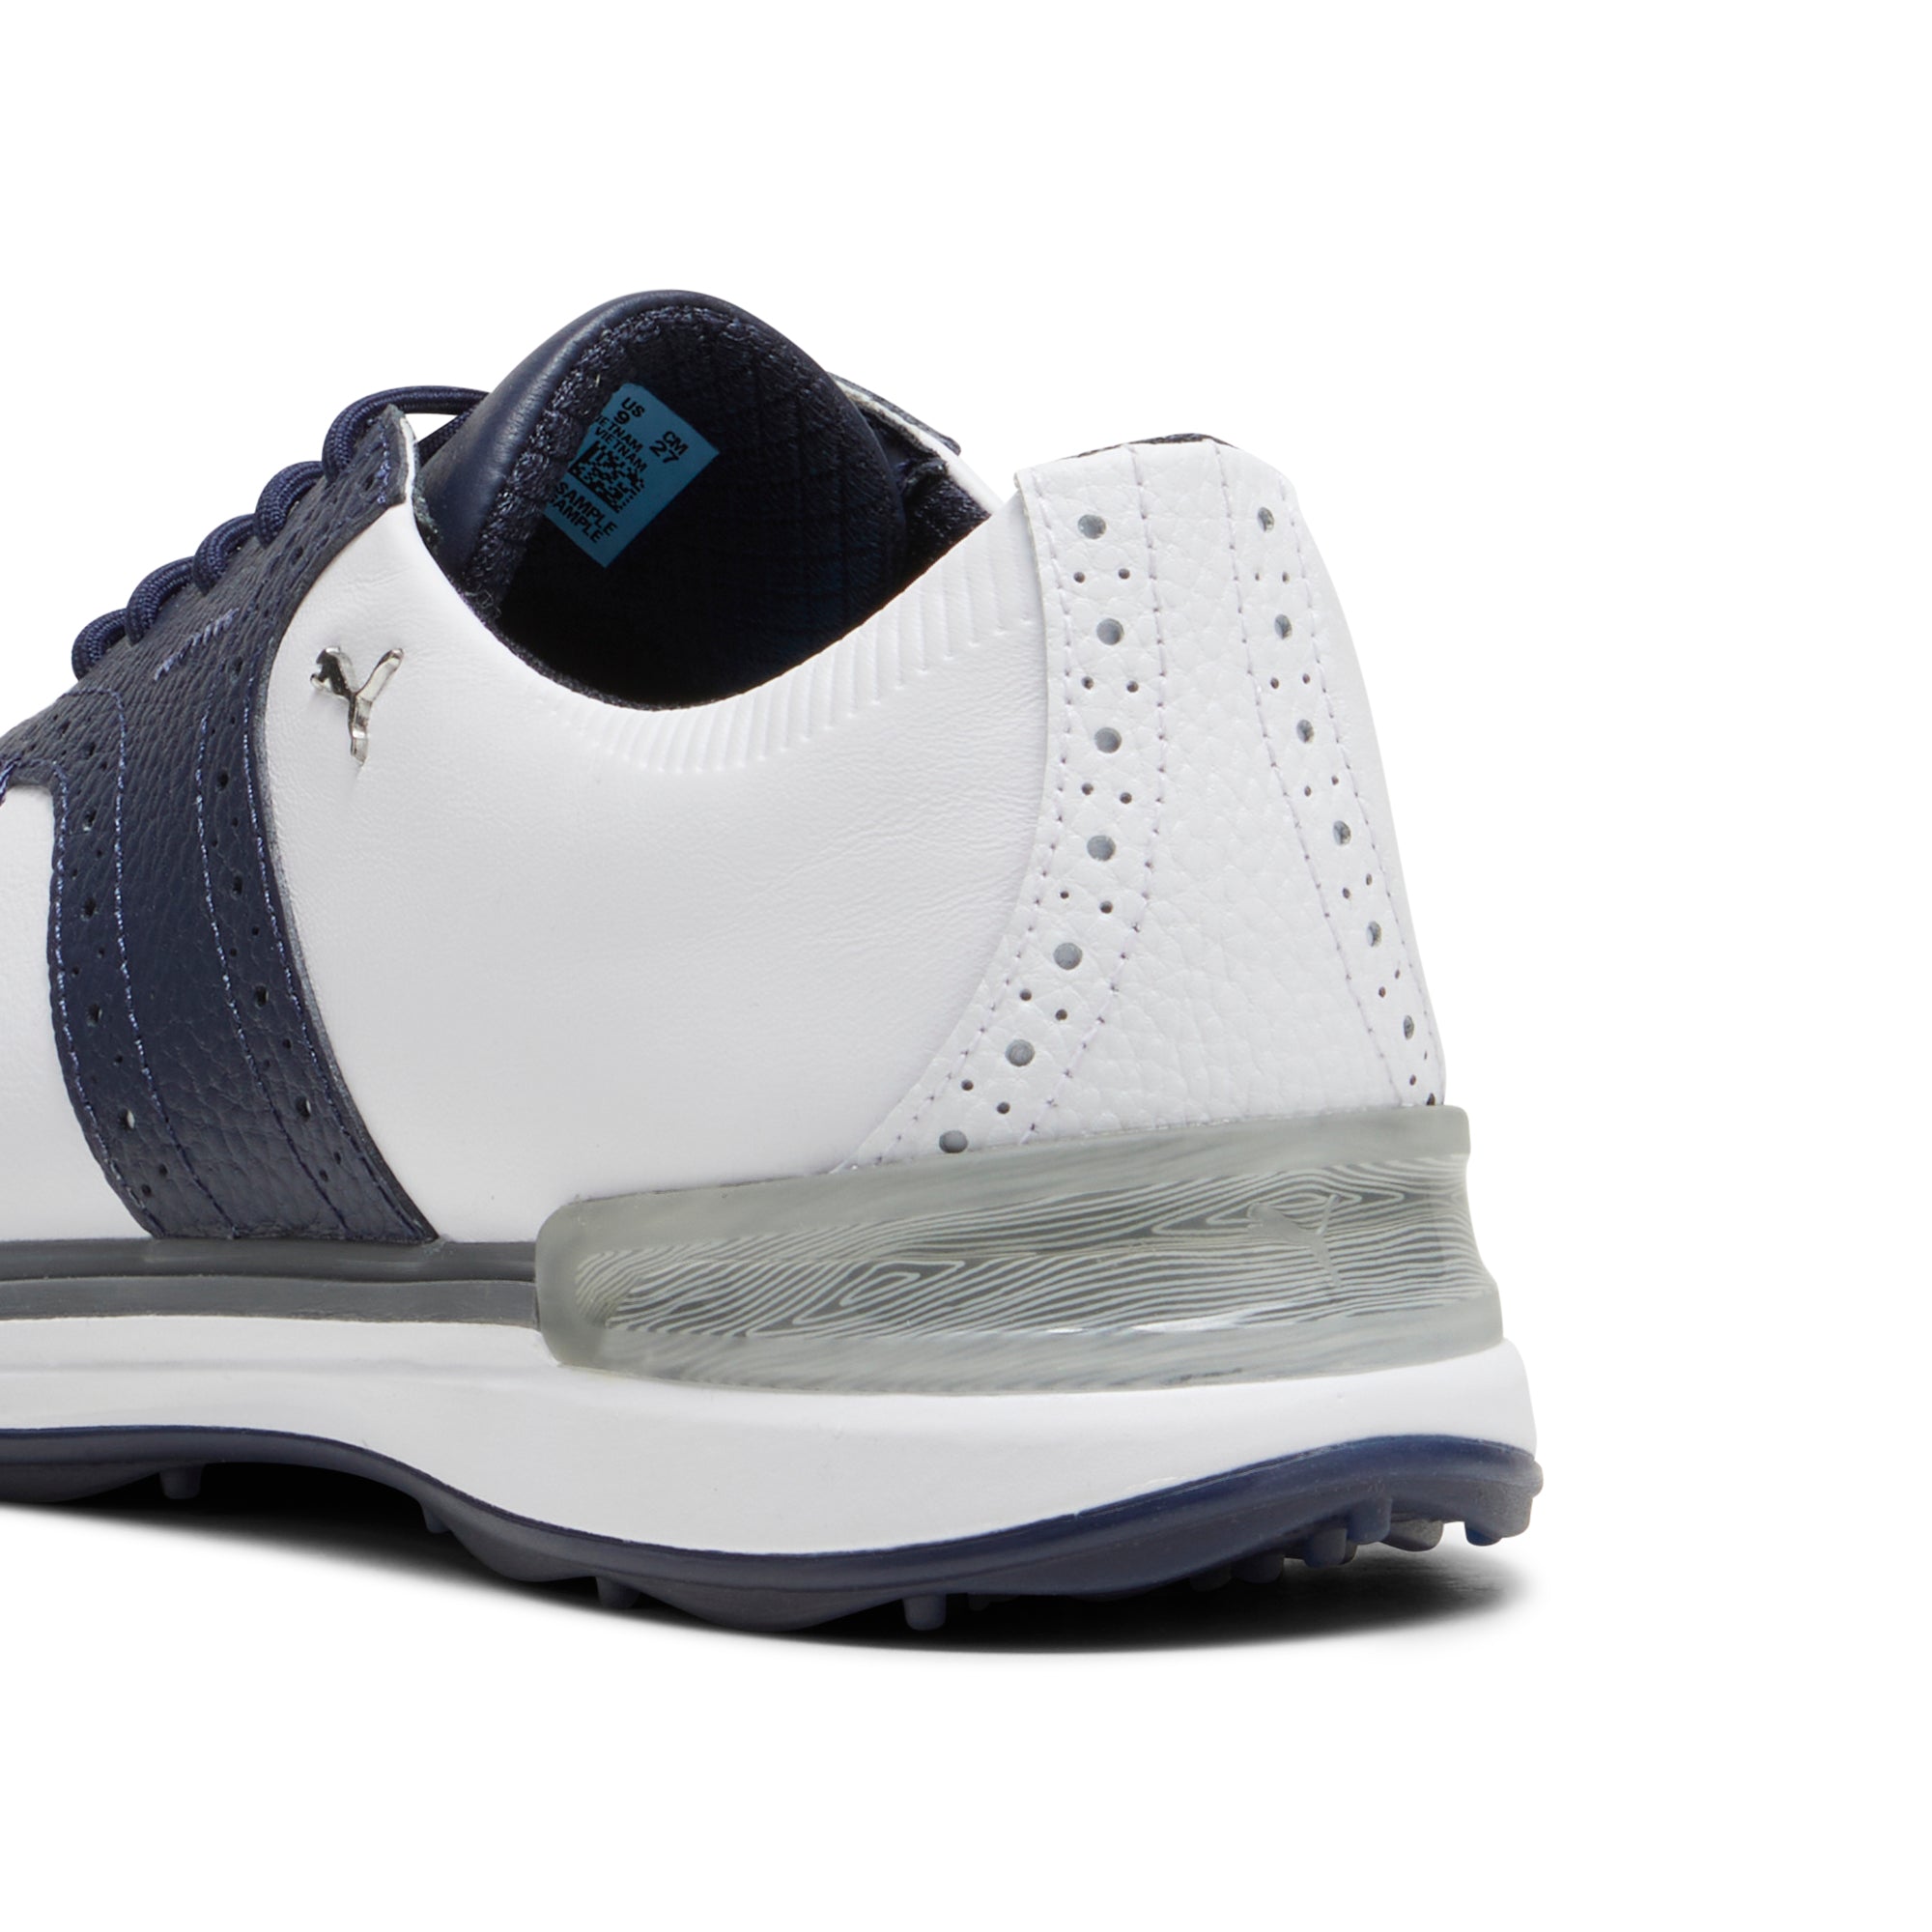 puma-avant-golf-shoes-379428-puma-white-deep-navy-speed-blue-05